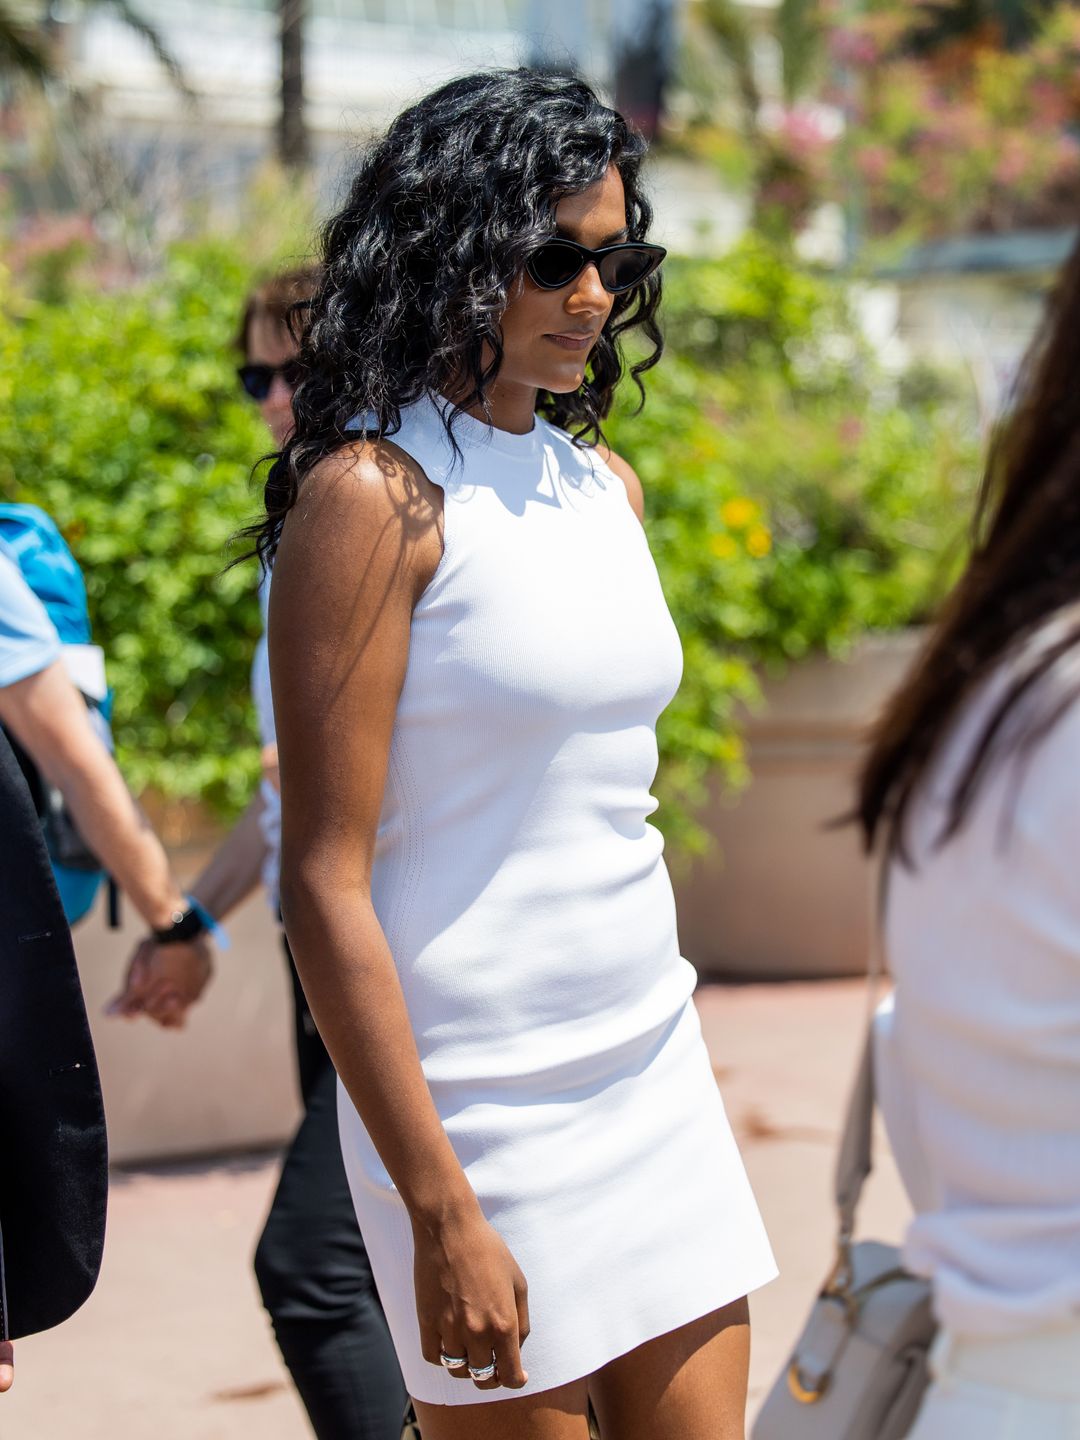 Bridgerton's Simone Ashley opted for a cool white mini dress and sunglasses